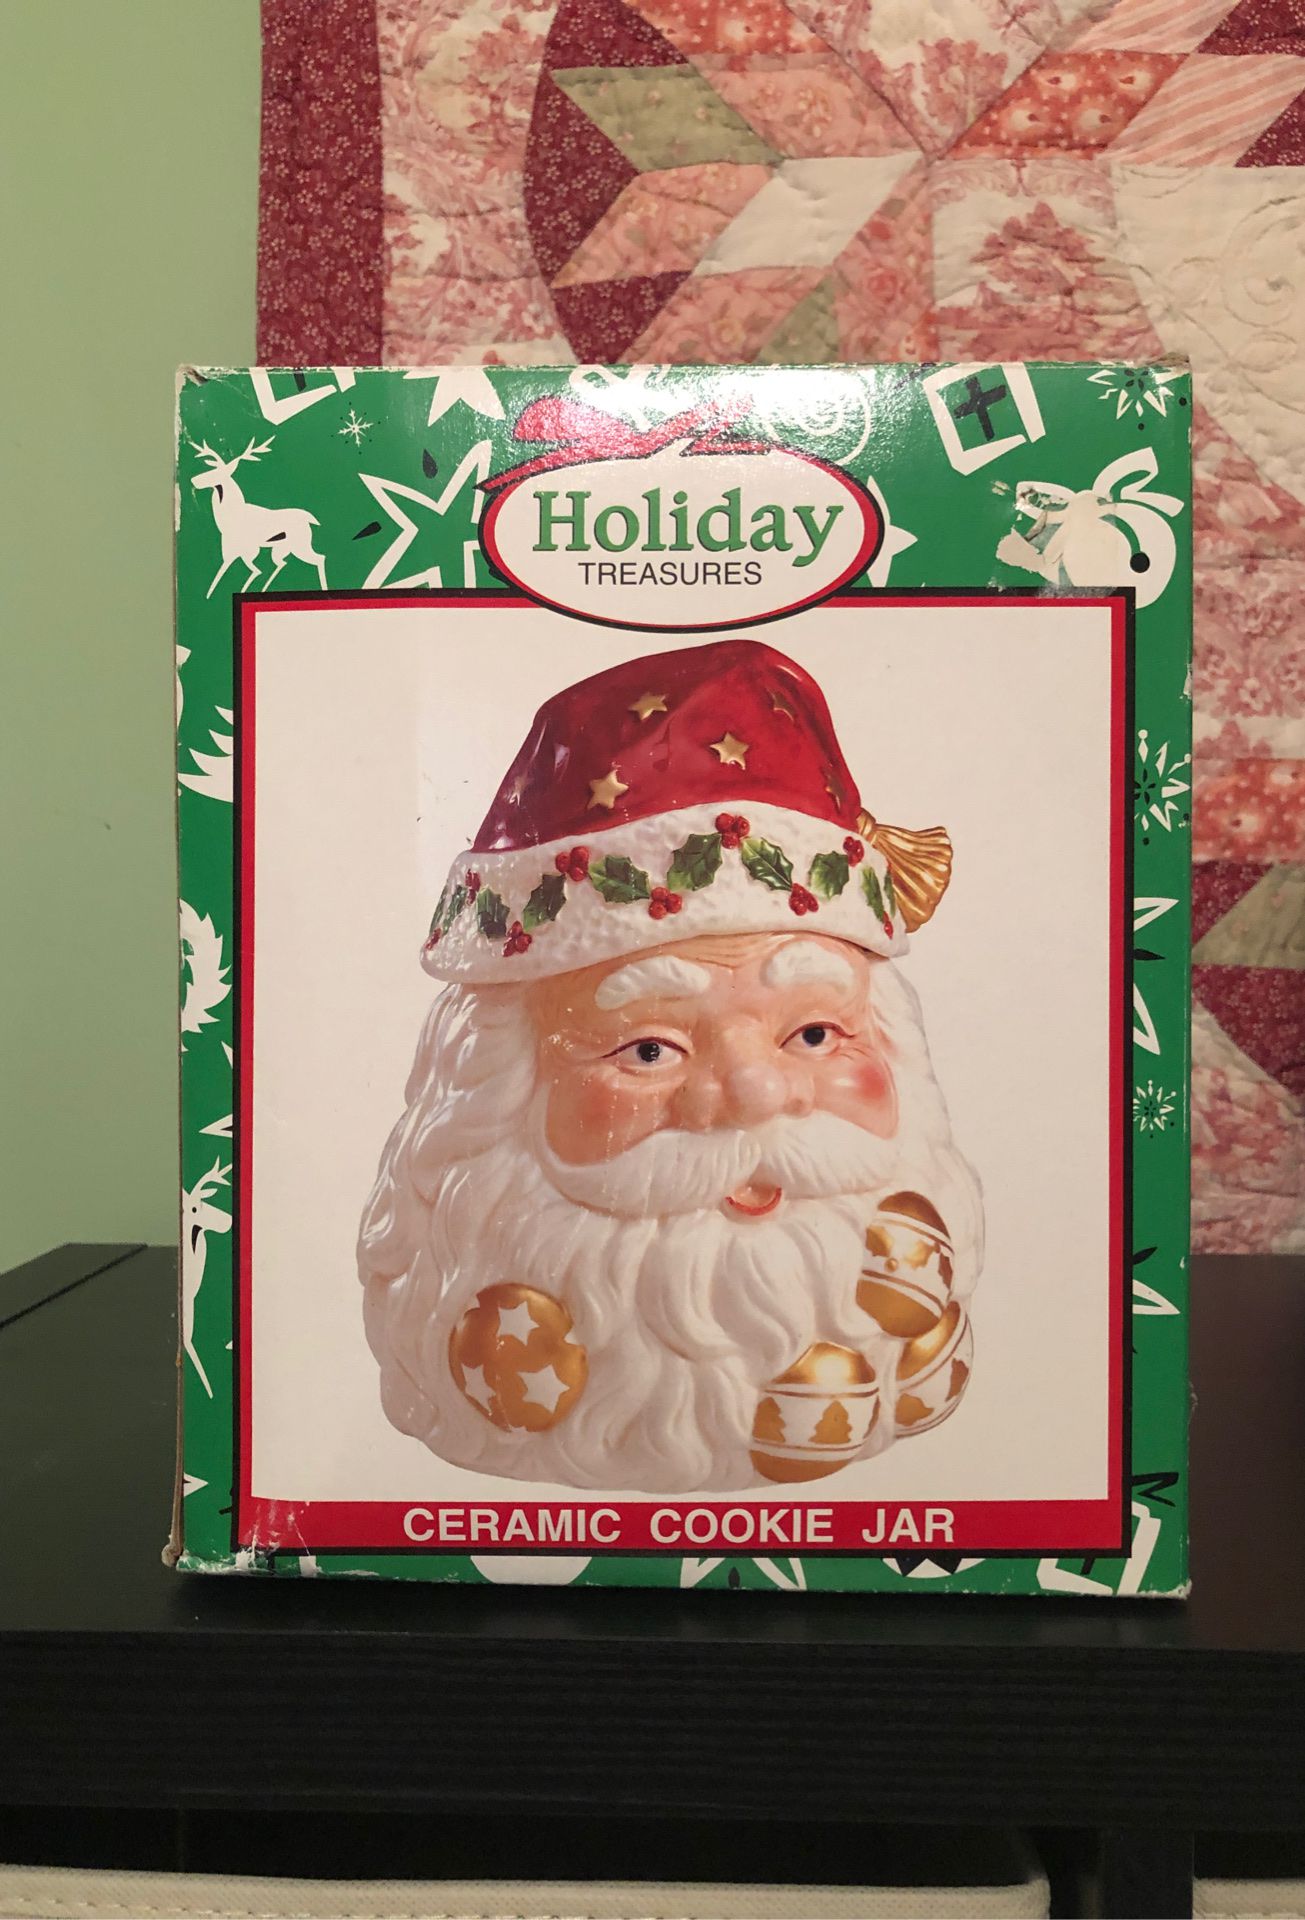 Christmas Santa Clause holiday cookie jar